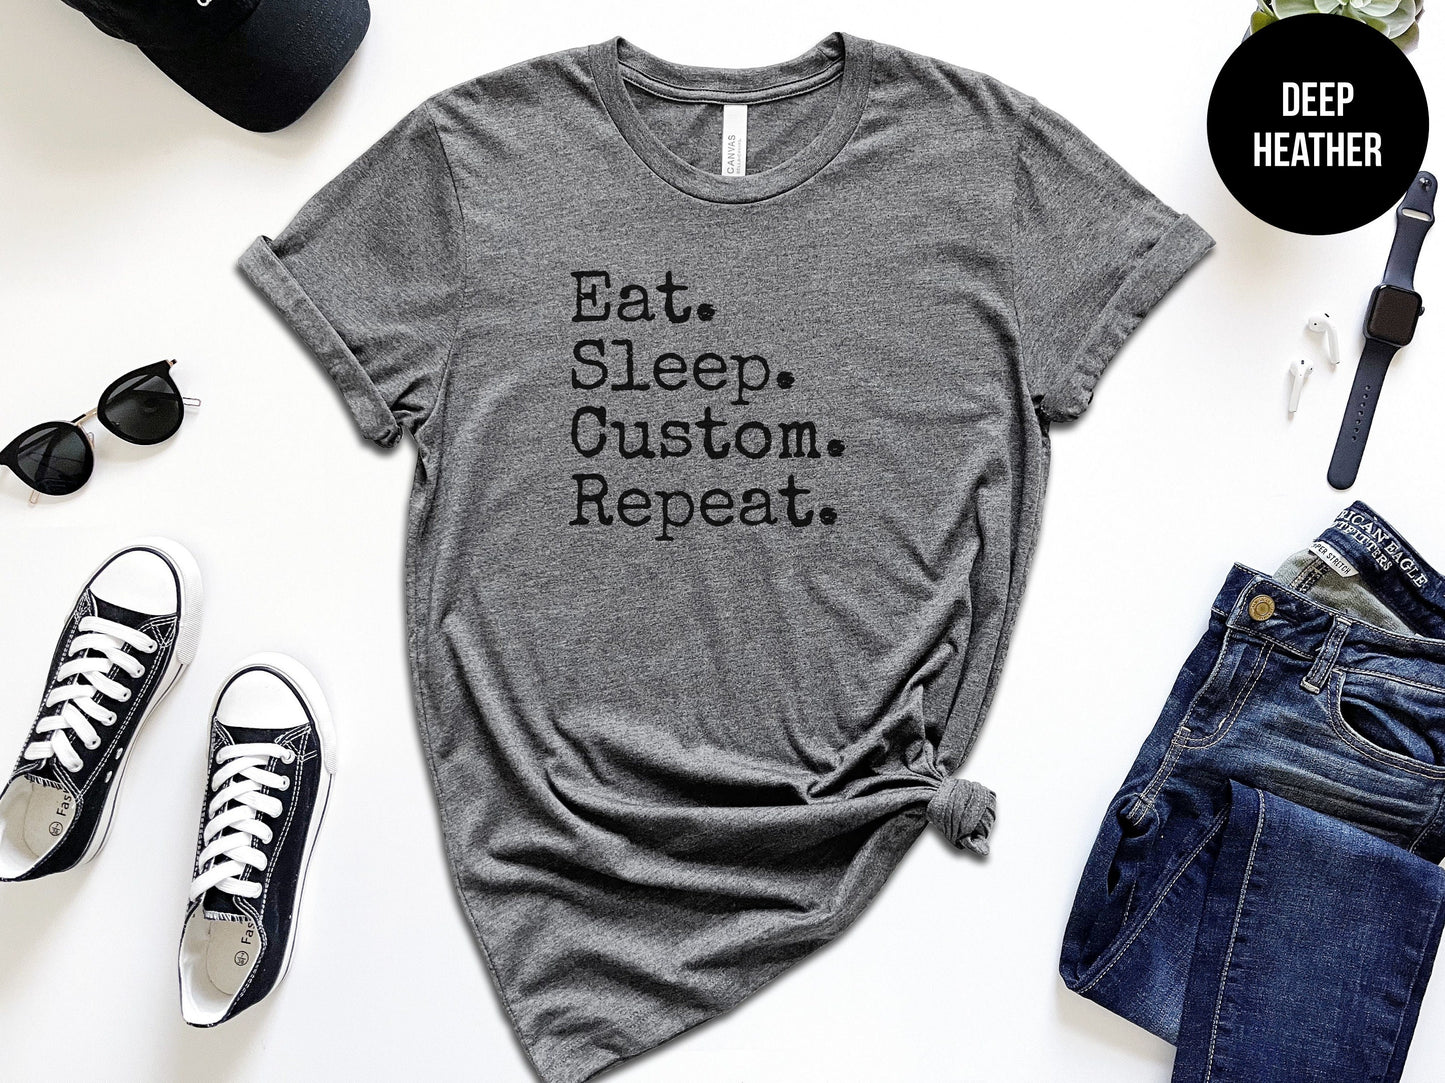 Eat Sleep "Custom" Repeat Shirt